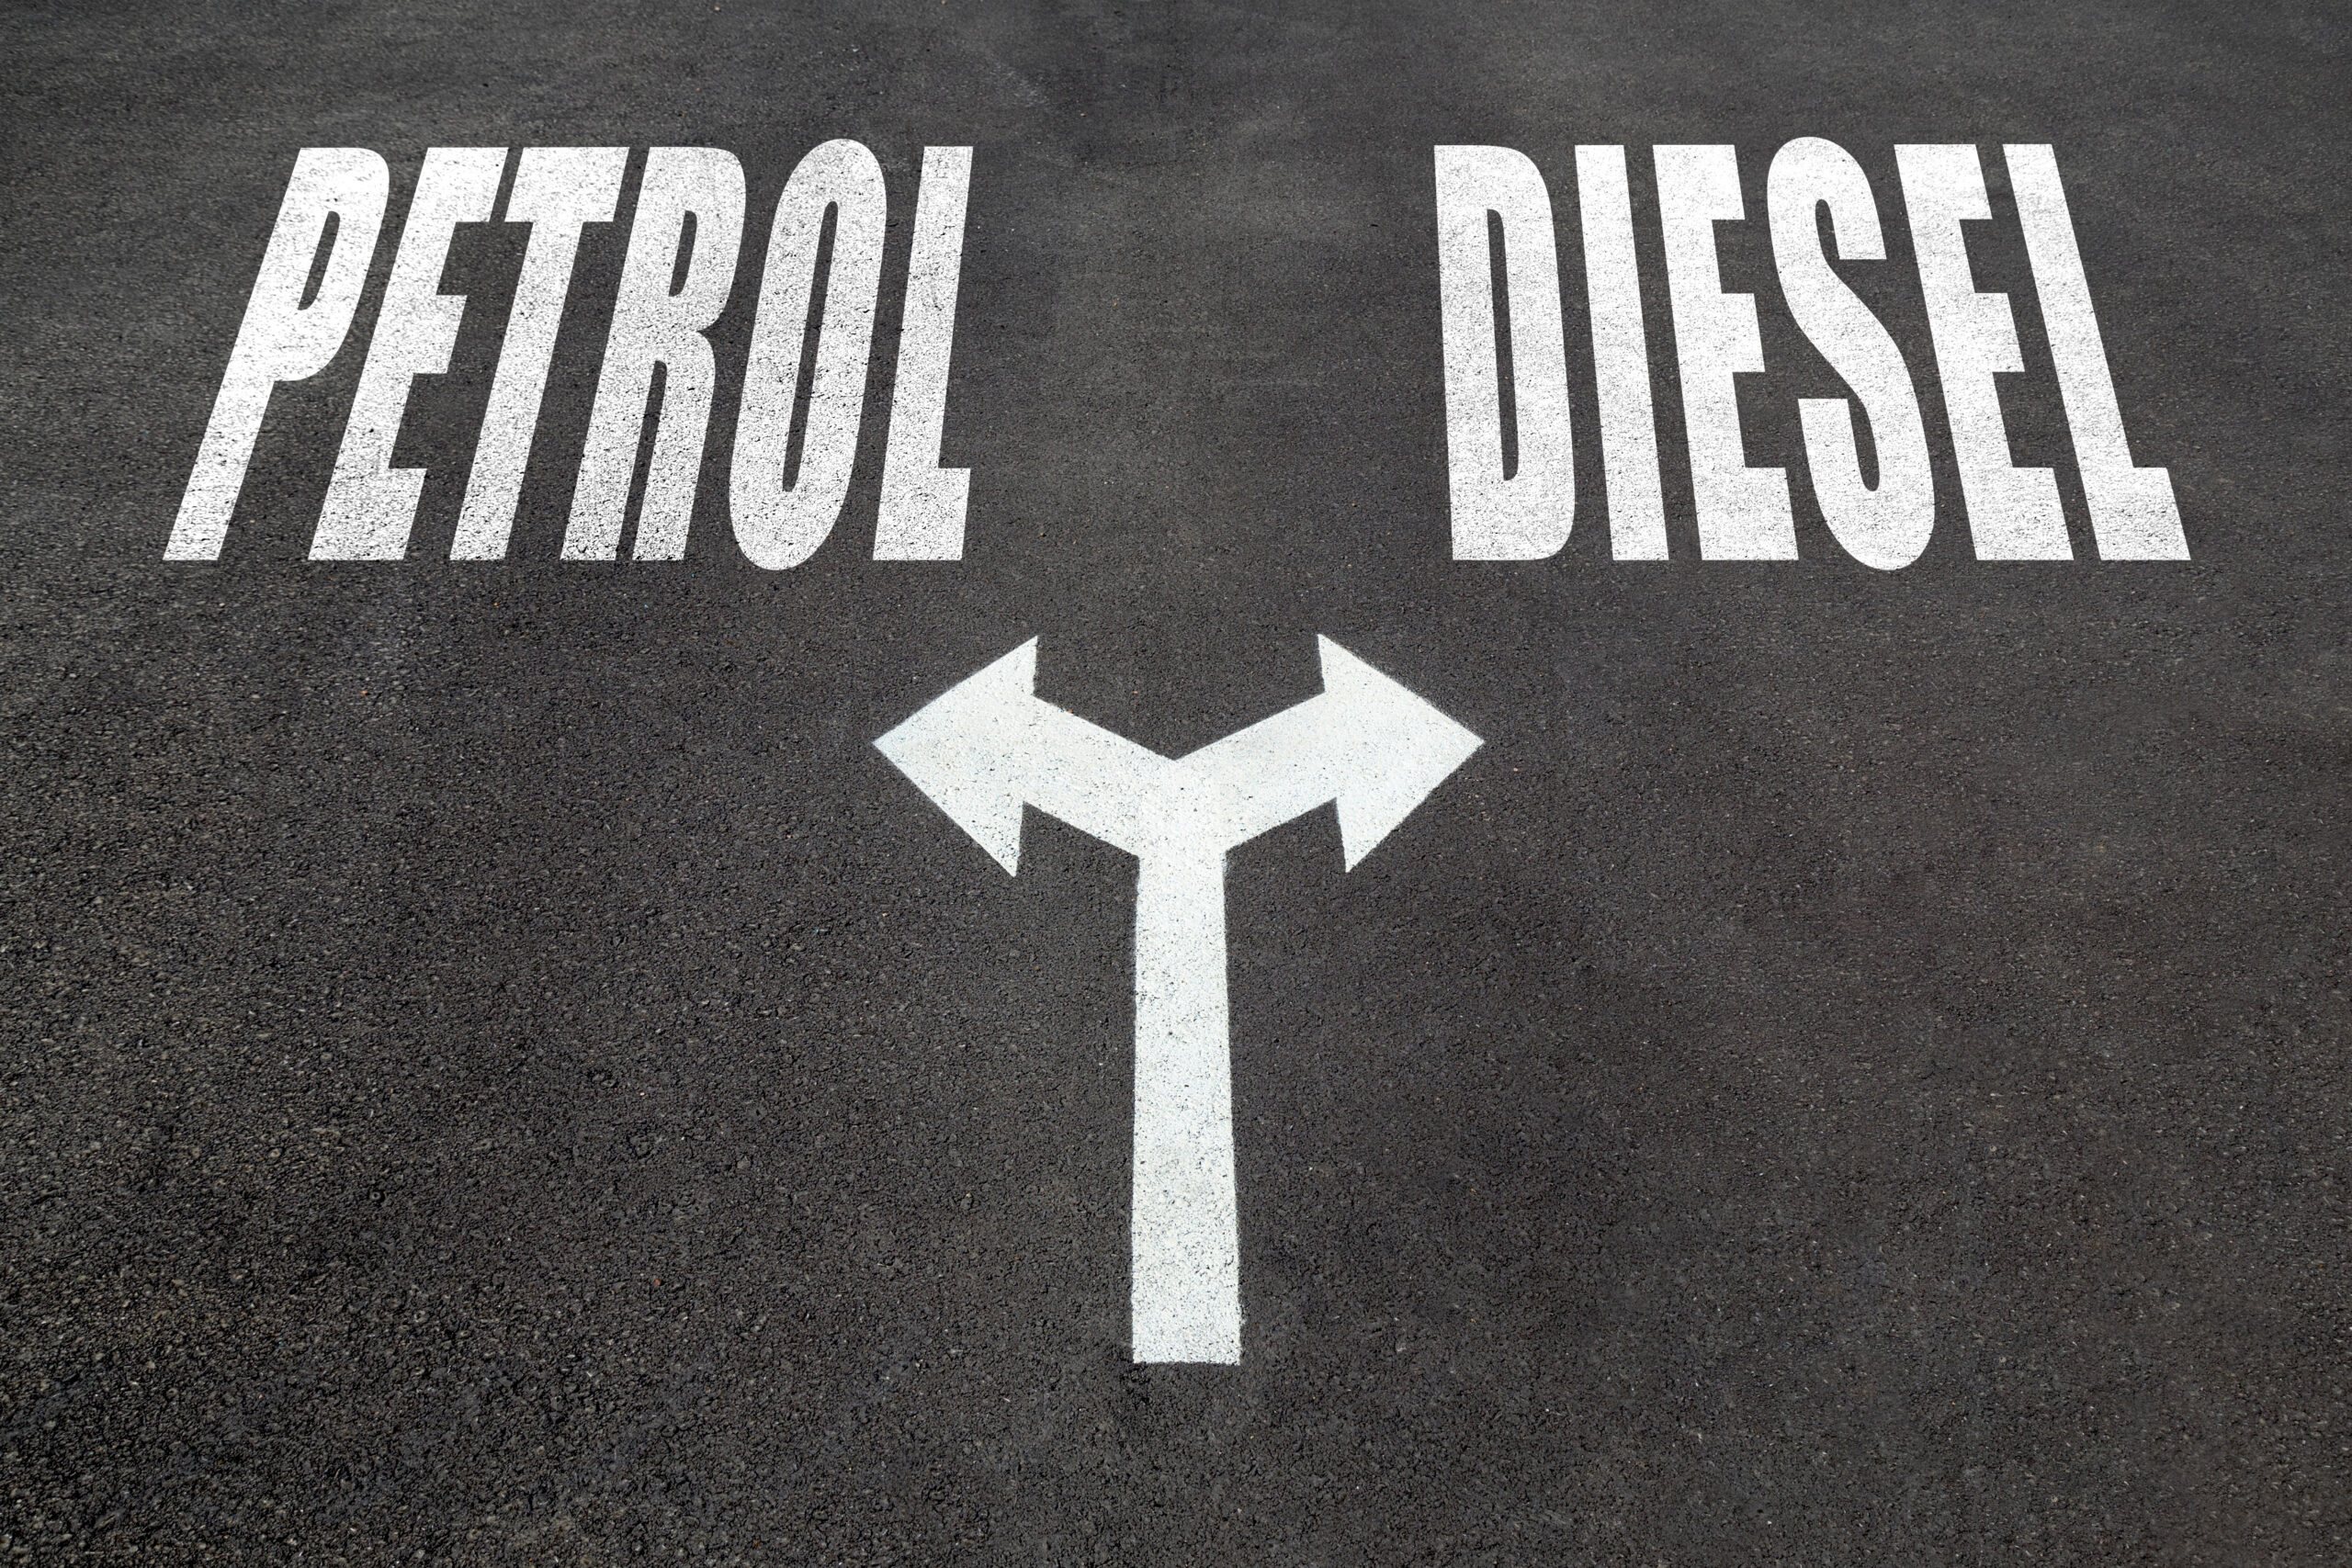 Petrol vs diesel choice concept, two direction arrows on asphalt.